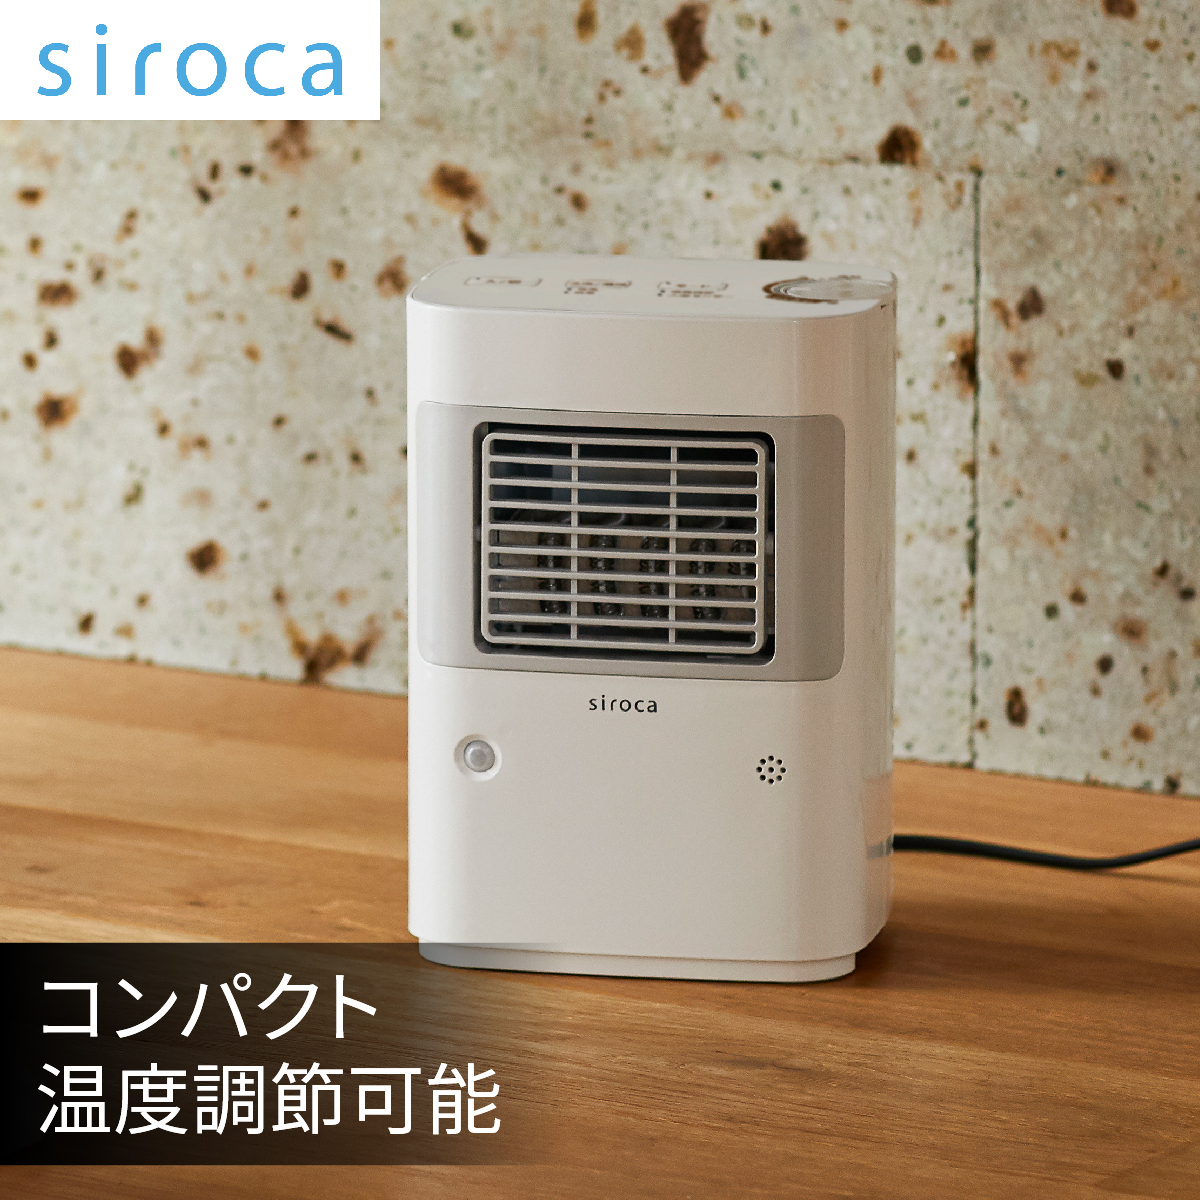 siroca 温度調節・人感センサー付き 足元ヒーター